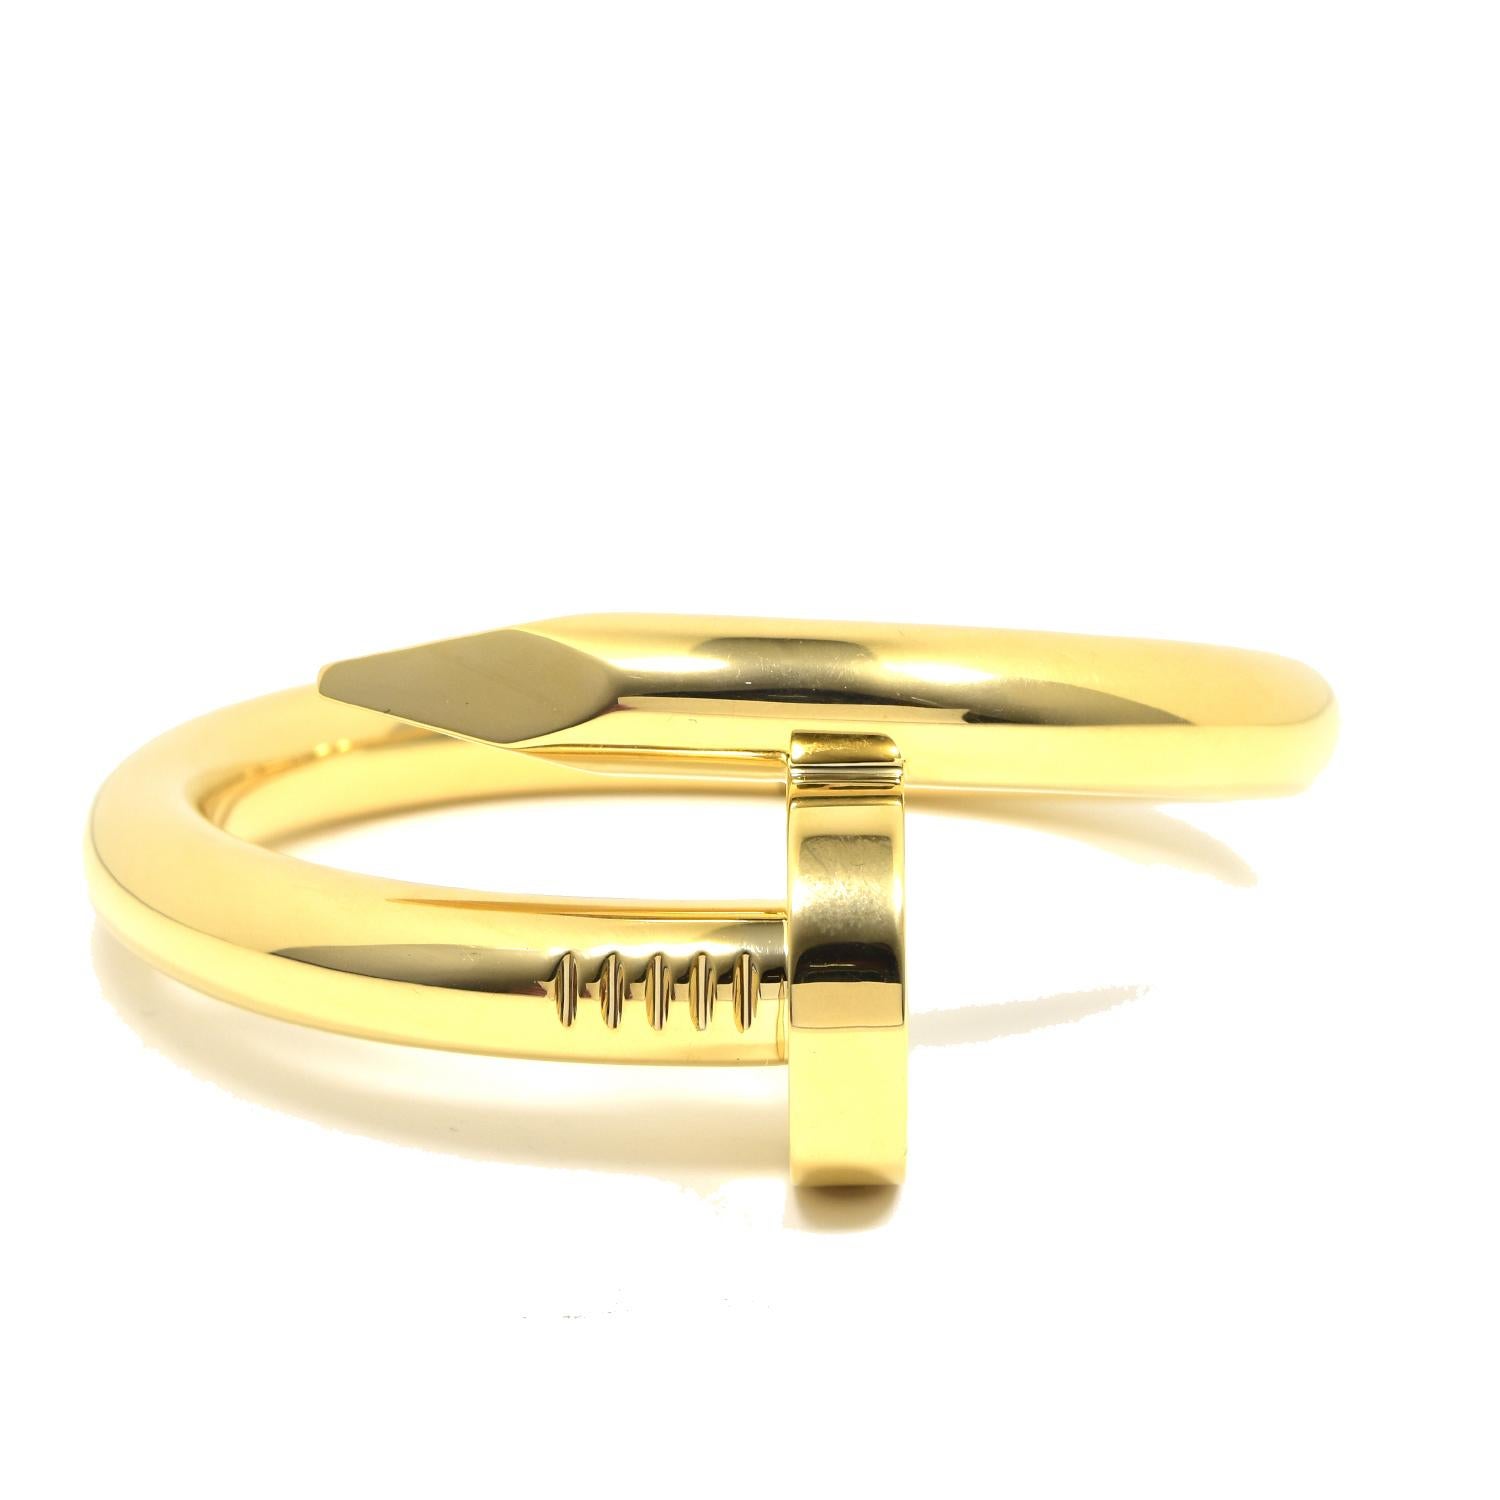 Designer: Cartier 

Collection: Juste Un Clou 

Metal: Yellow Gold 

Metal Purity: 18k

Model Size: Large 

Bracelet Size: 16

Total Item Weigh(Grams)t: 84.8 g

Hallmark: Cartier; 16; Serial No.; AU750

Estimate Retail: $37,700 excluding